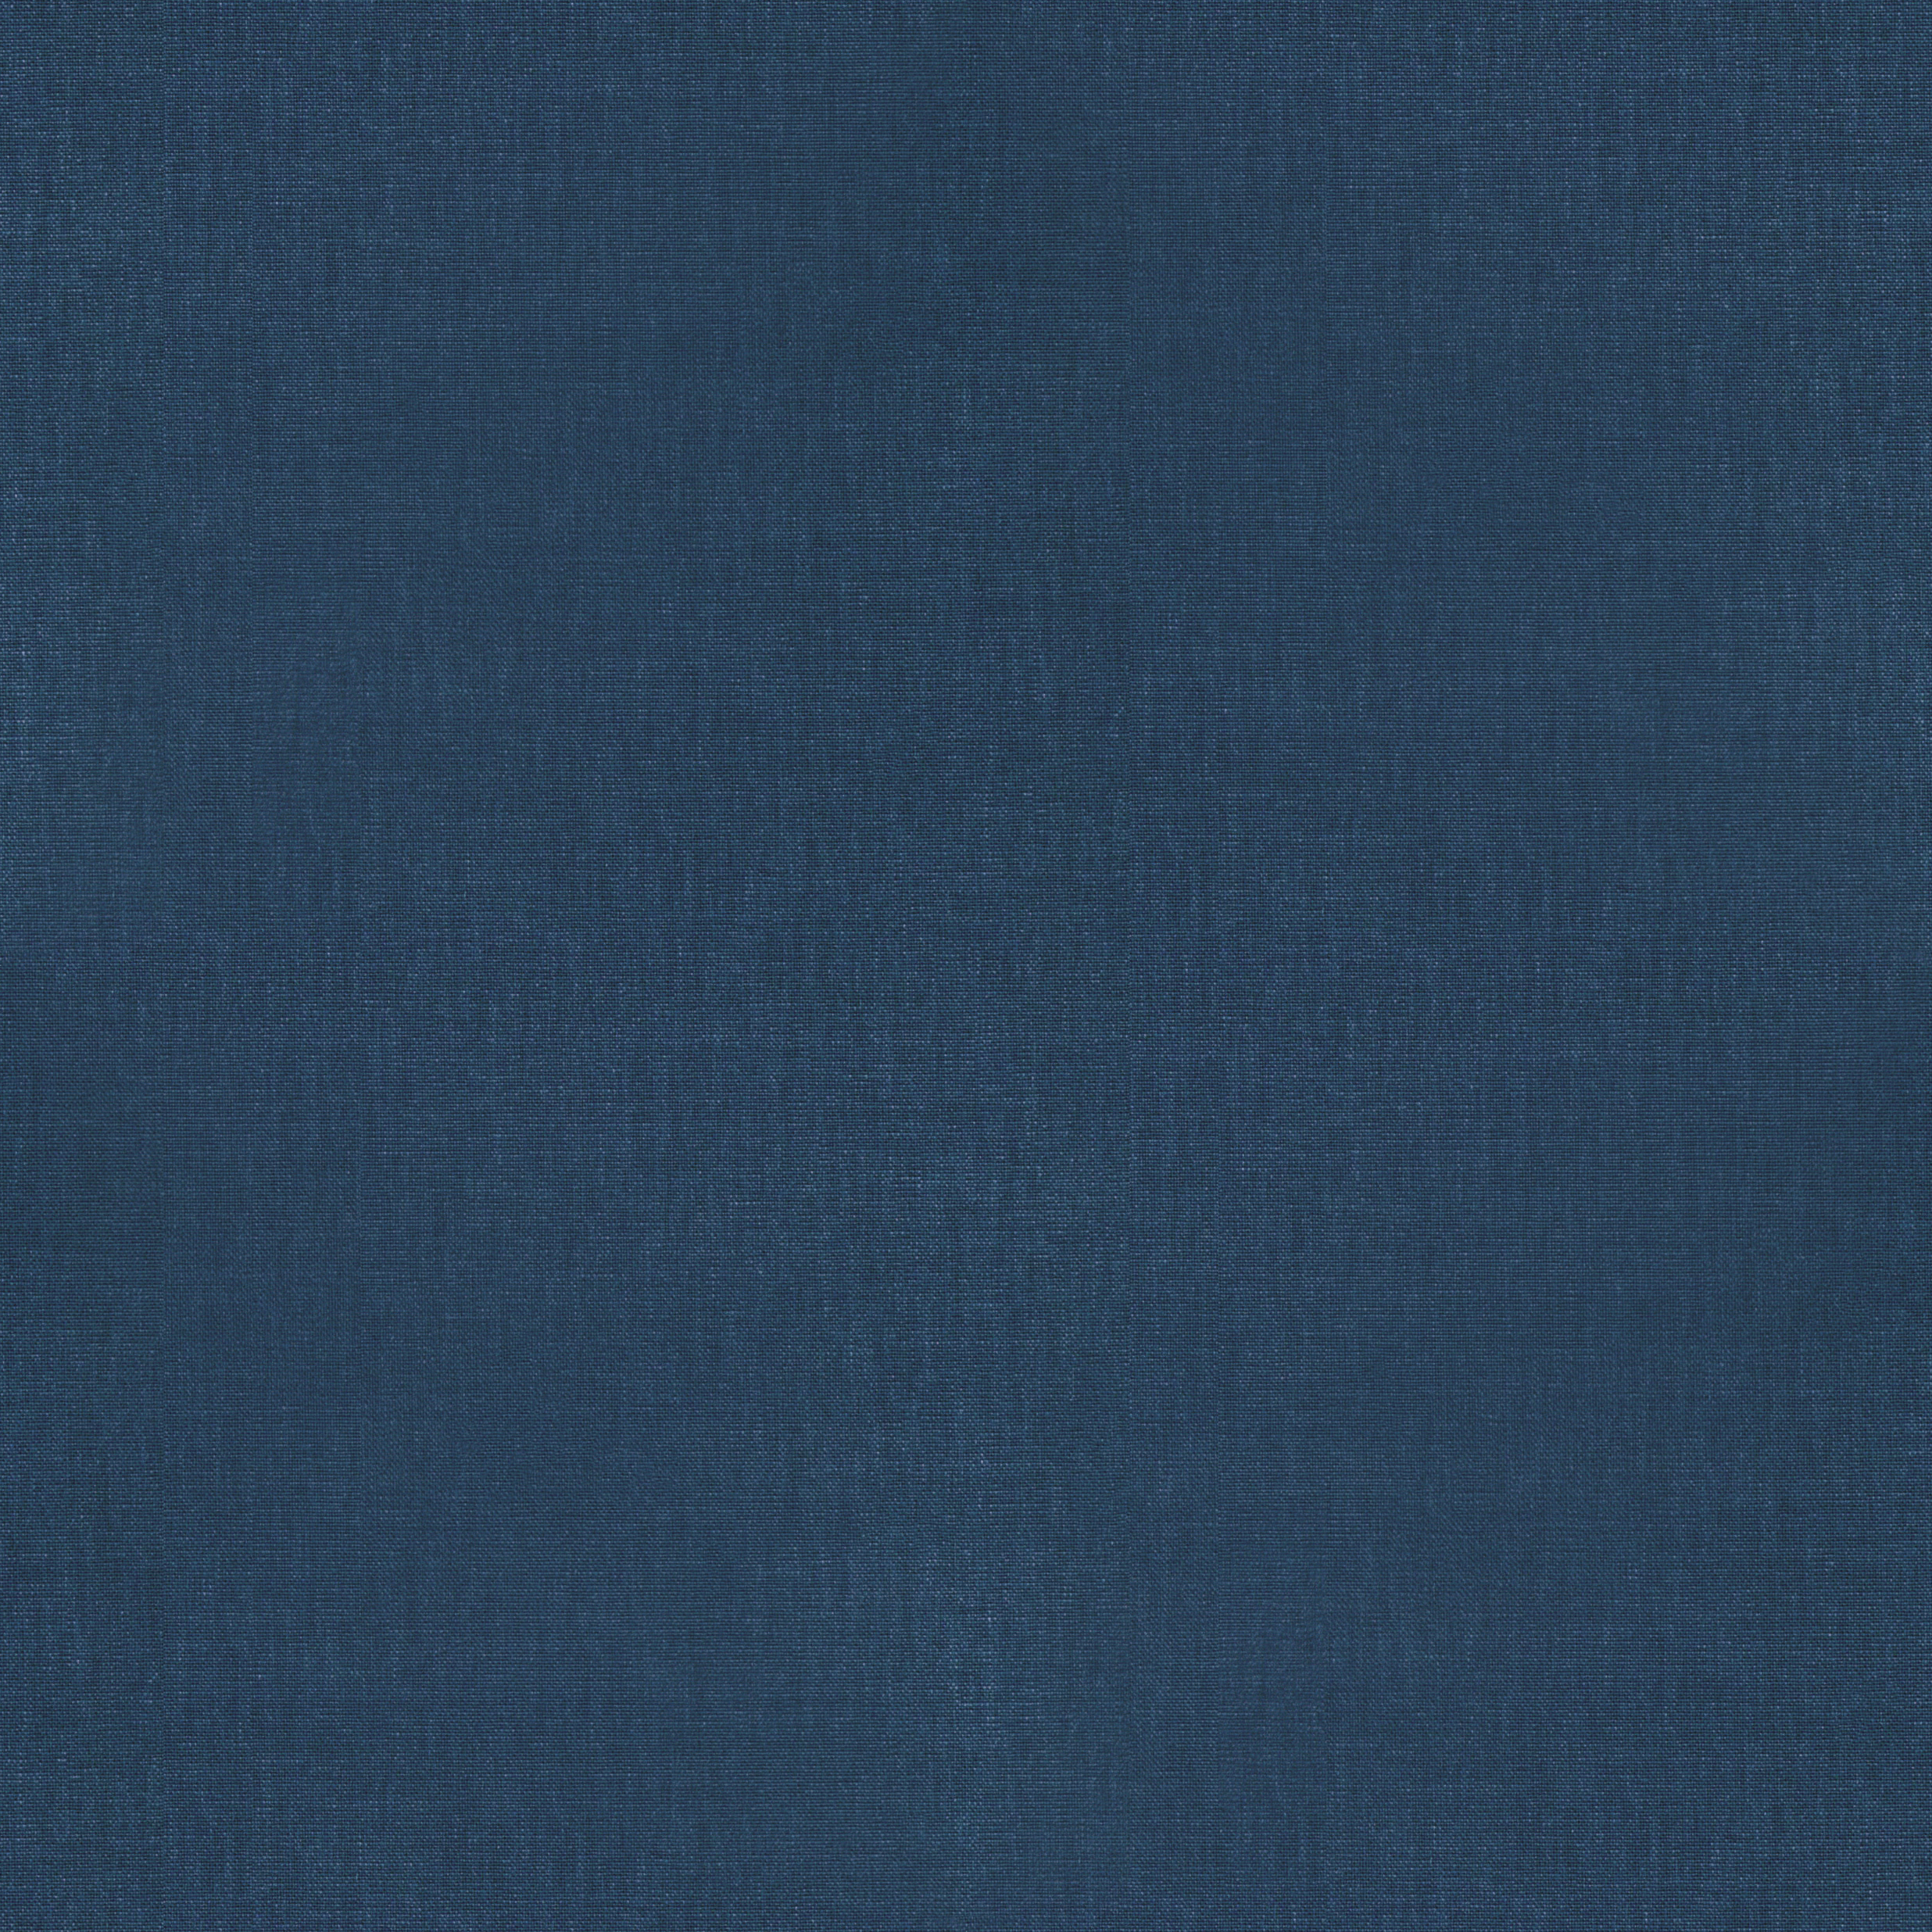 Nautical Blue coloured Classic Cotton fabric swatch